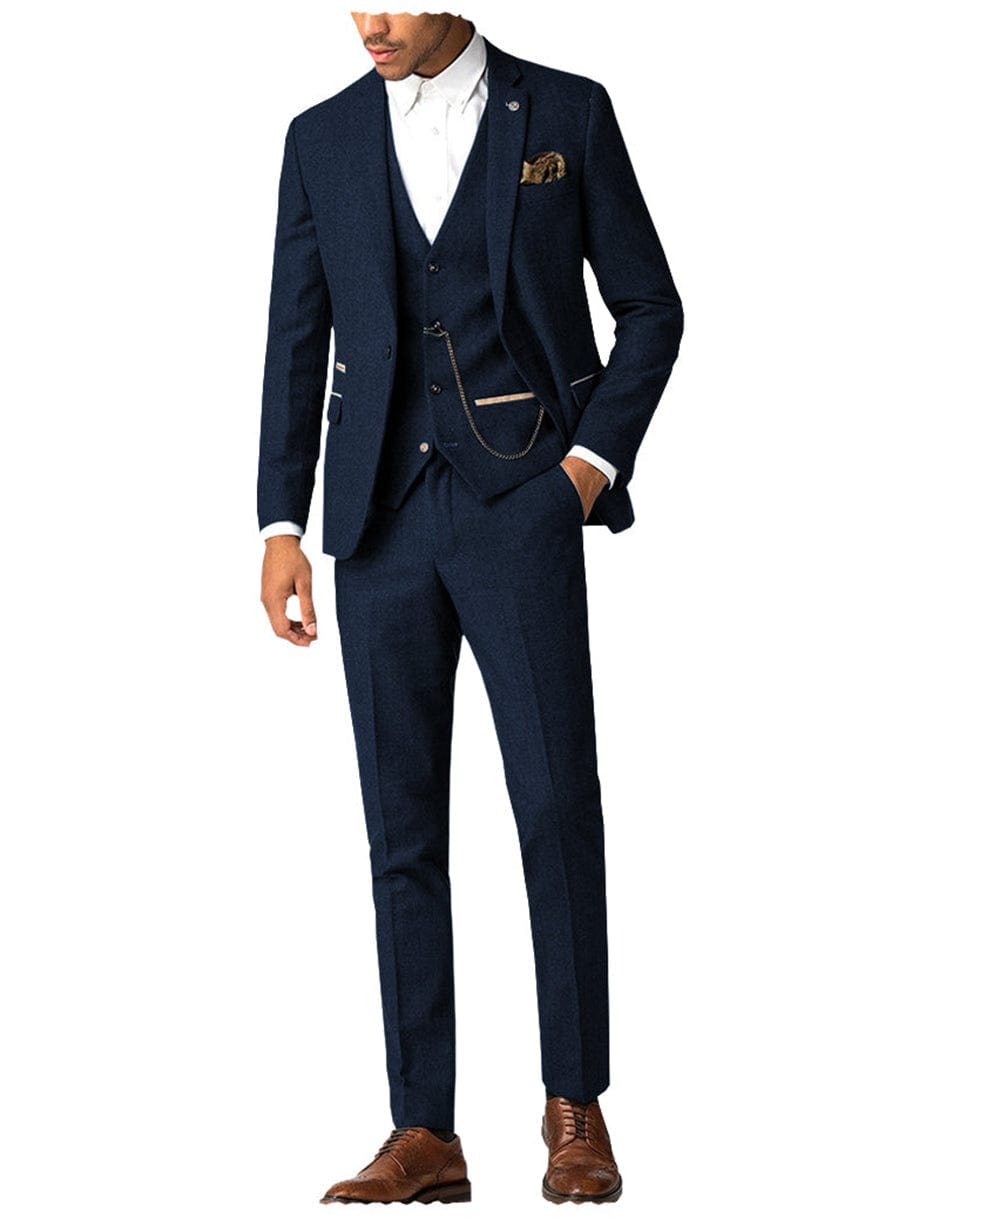 aesido Flat 3 Piece Men's Suit For Wedding(Blazer + Vest + Pants)